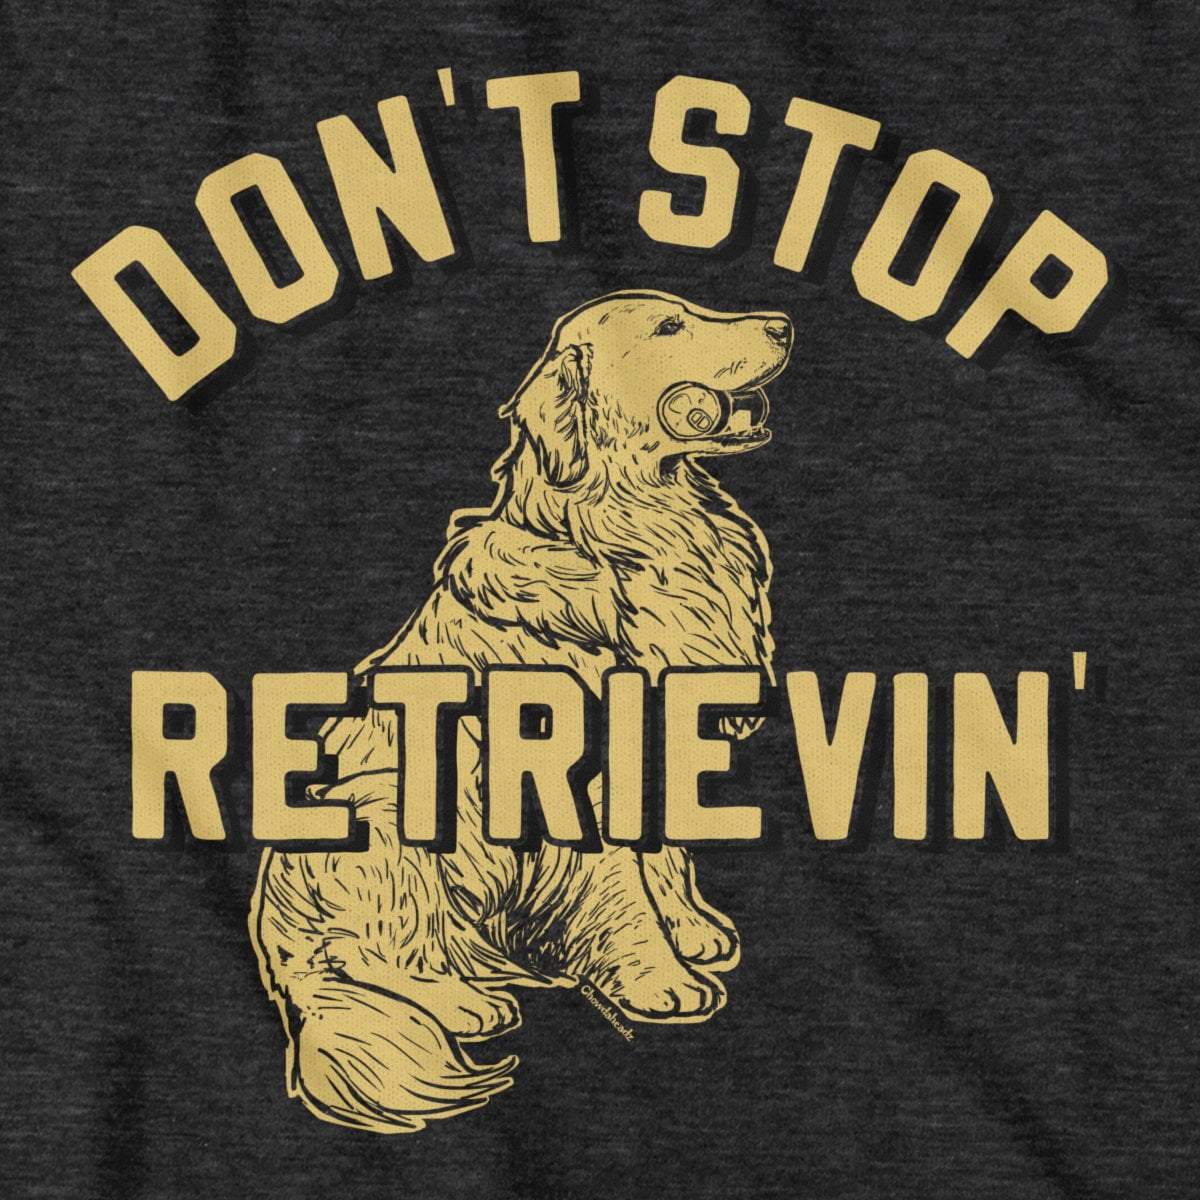 Don't Stop Retrievin' T-Shirt - Chowdaheadz